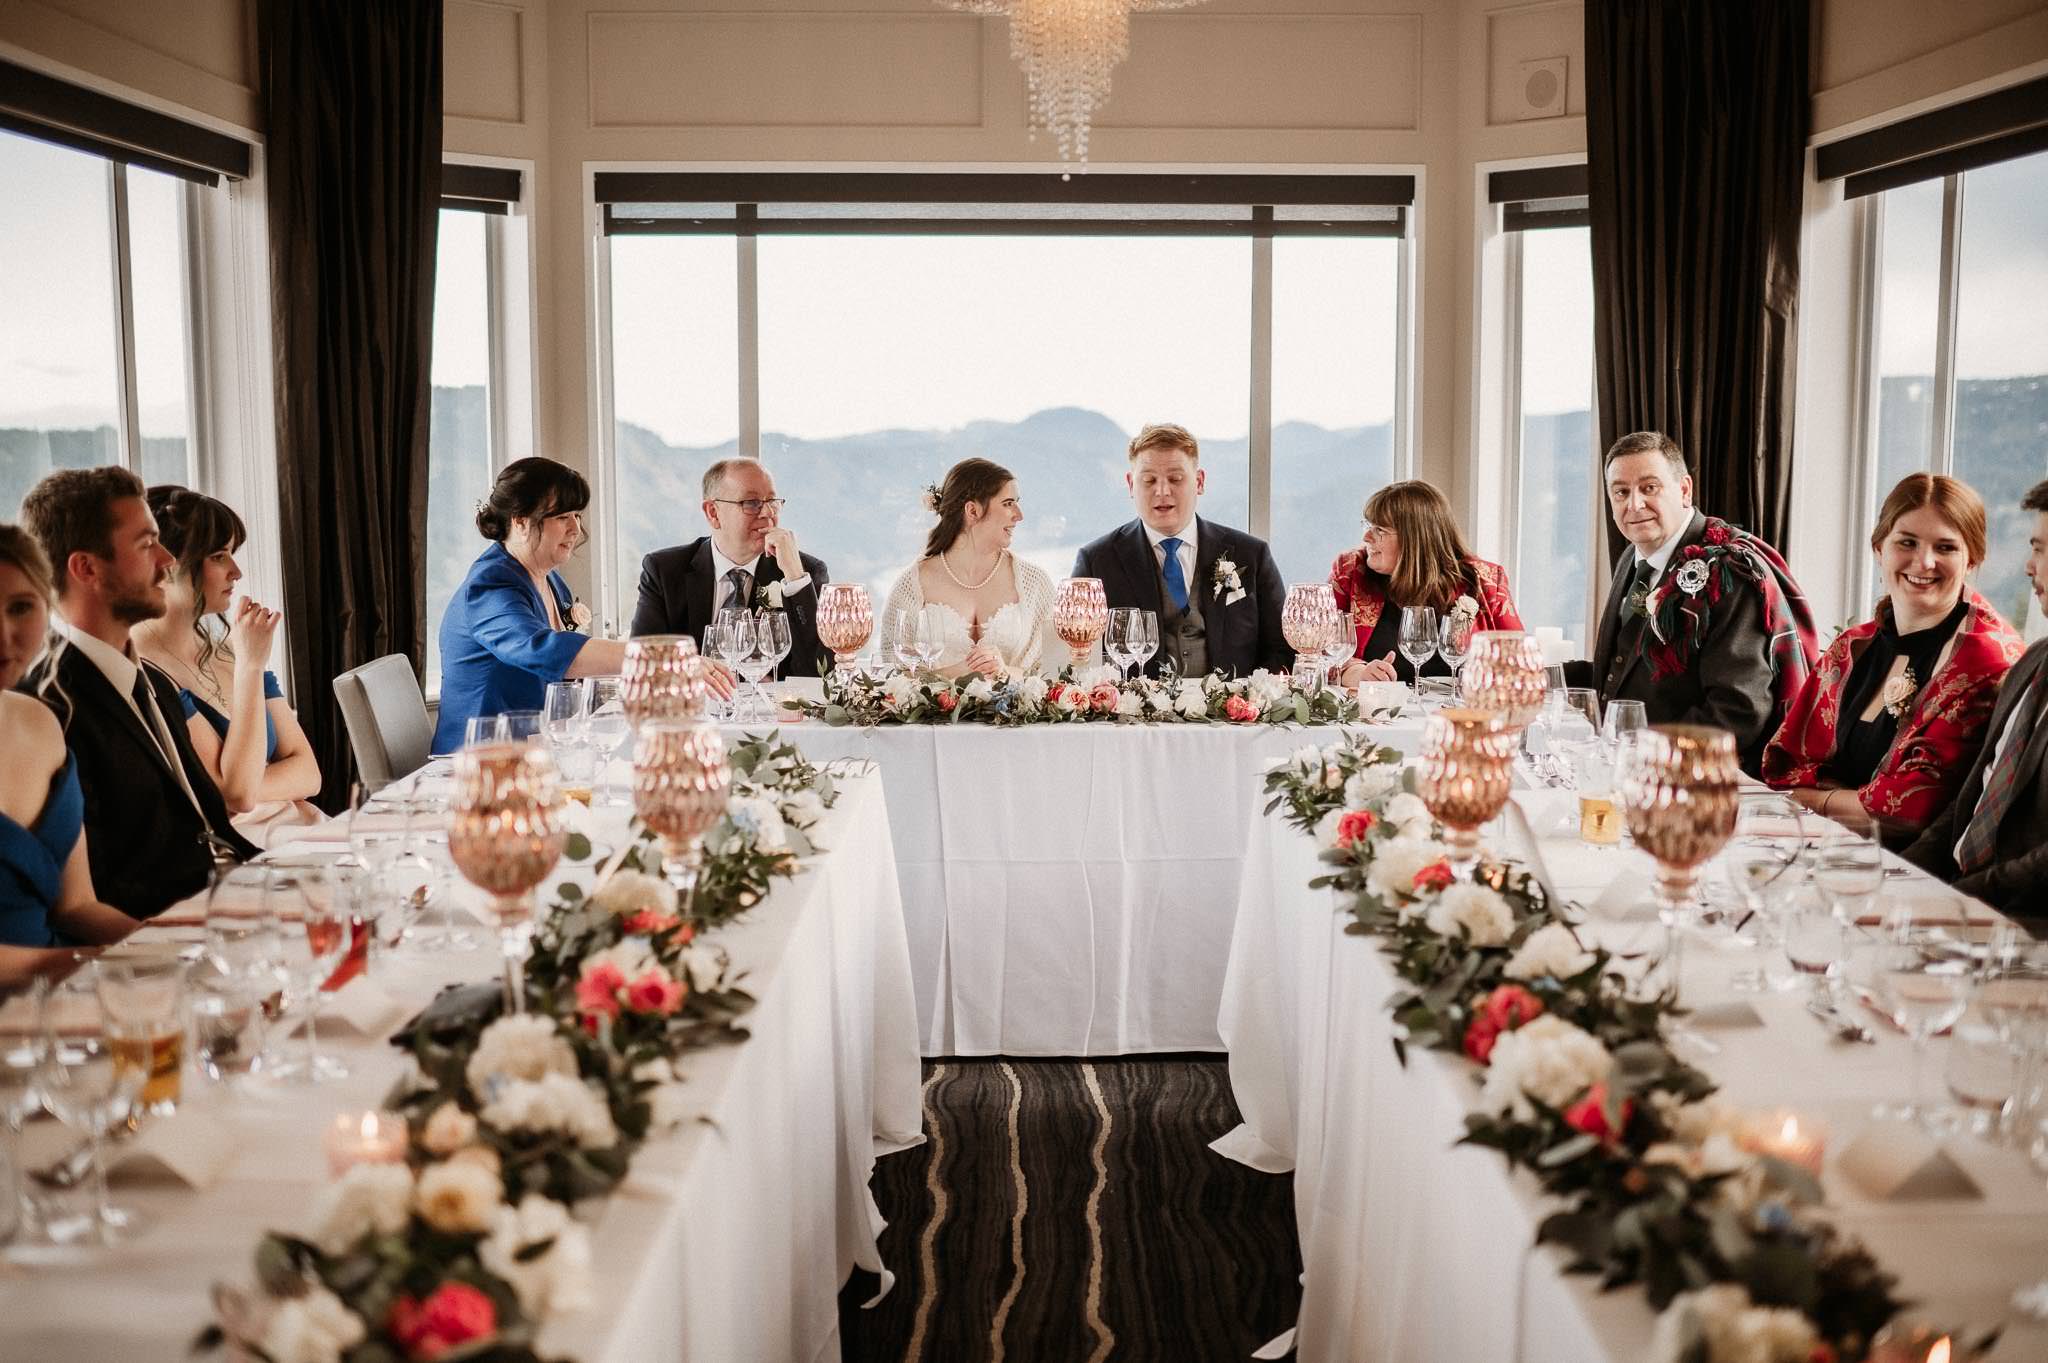 Wedding Photographer Victoria Villa Eyrie Weddings Reception Dinner Table